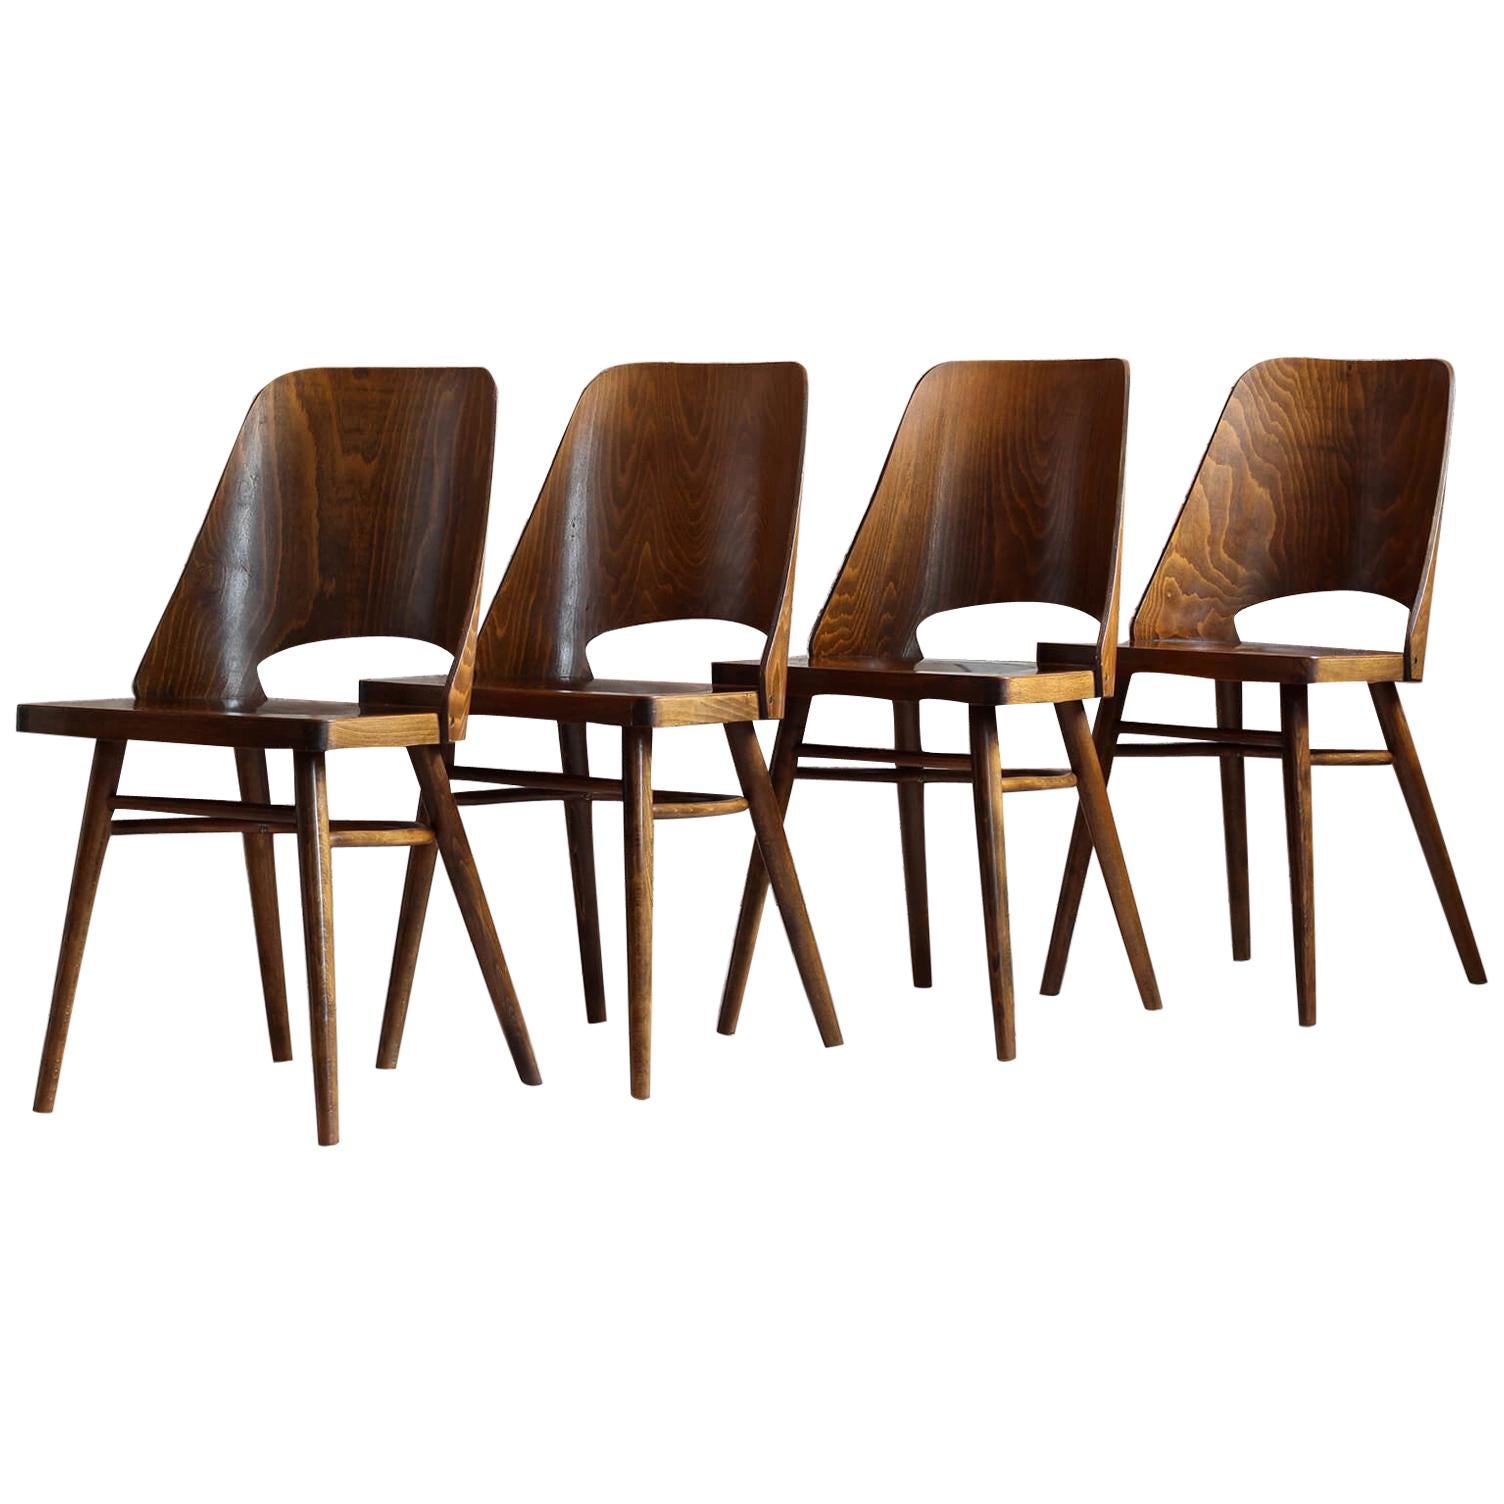 Set of 4 Dining Chairs by Radomir Hofman for TON, Model 514, Beech Veneer For Sale